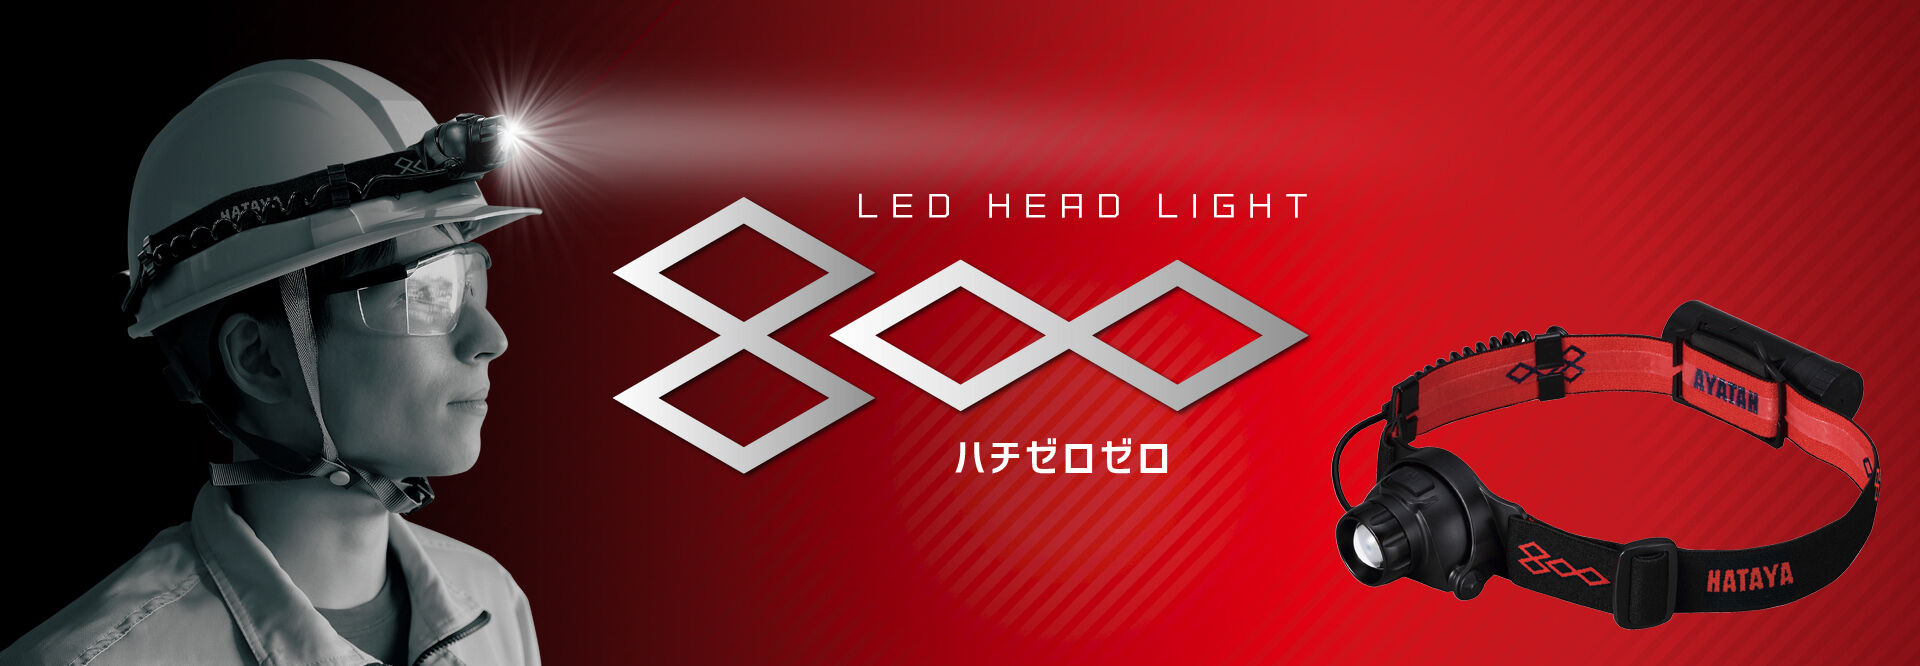 LEDヘッドライト800